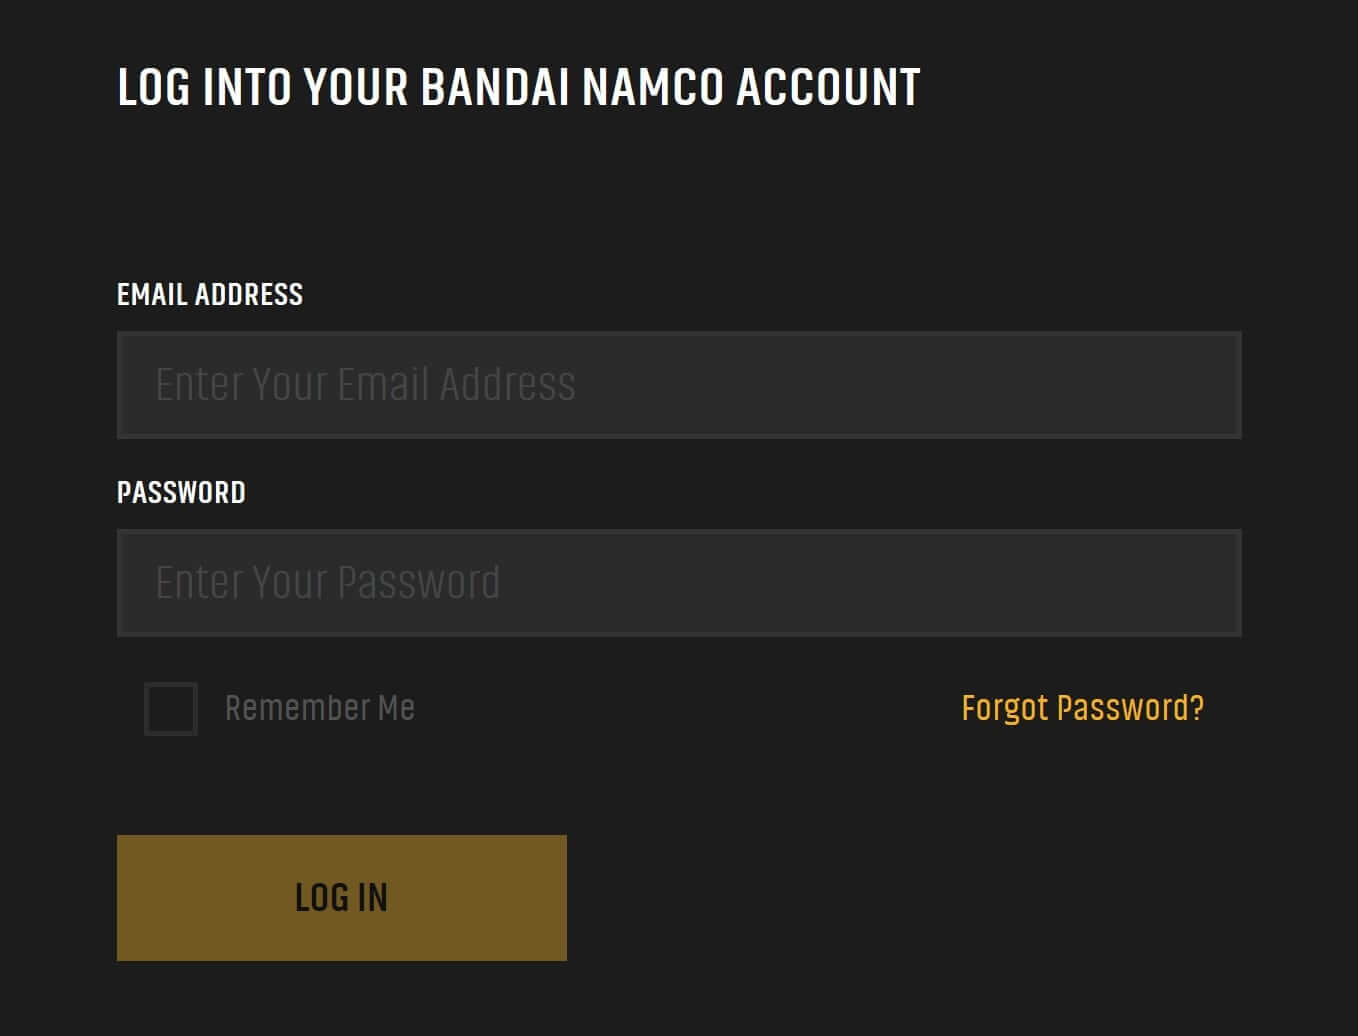 Log_into_your_bandai_namco_account.jpg